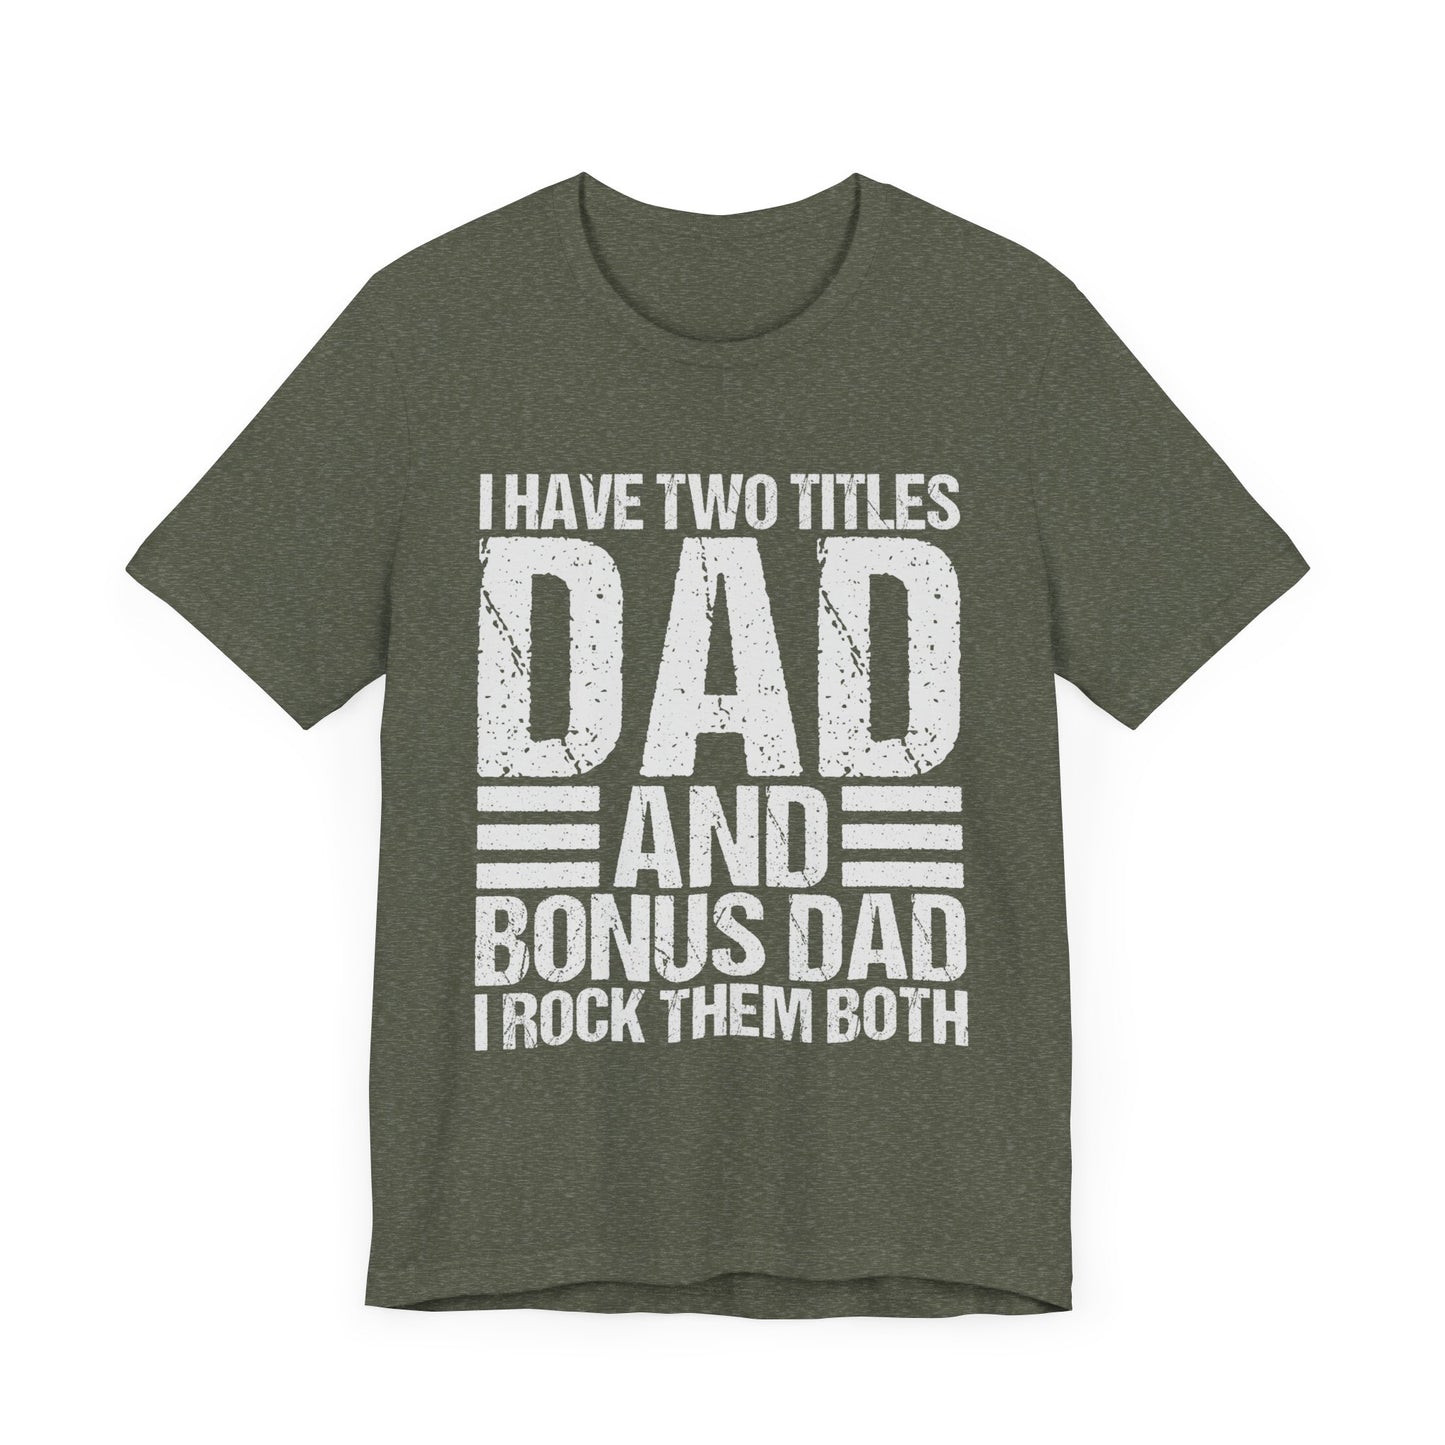 Bonus Dad Father's Day Short Sleeve Tee